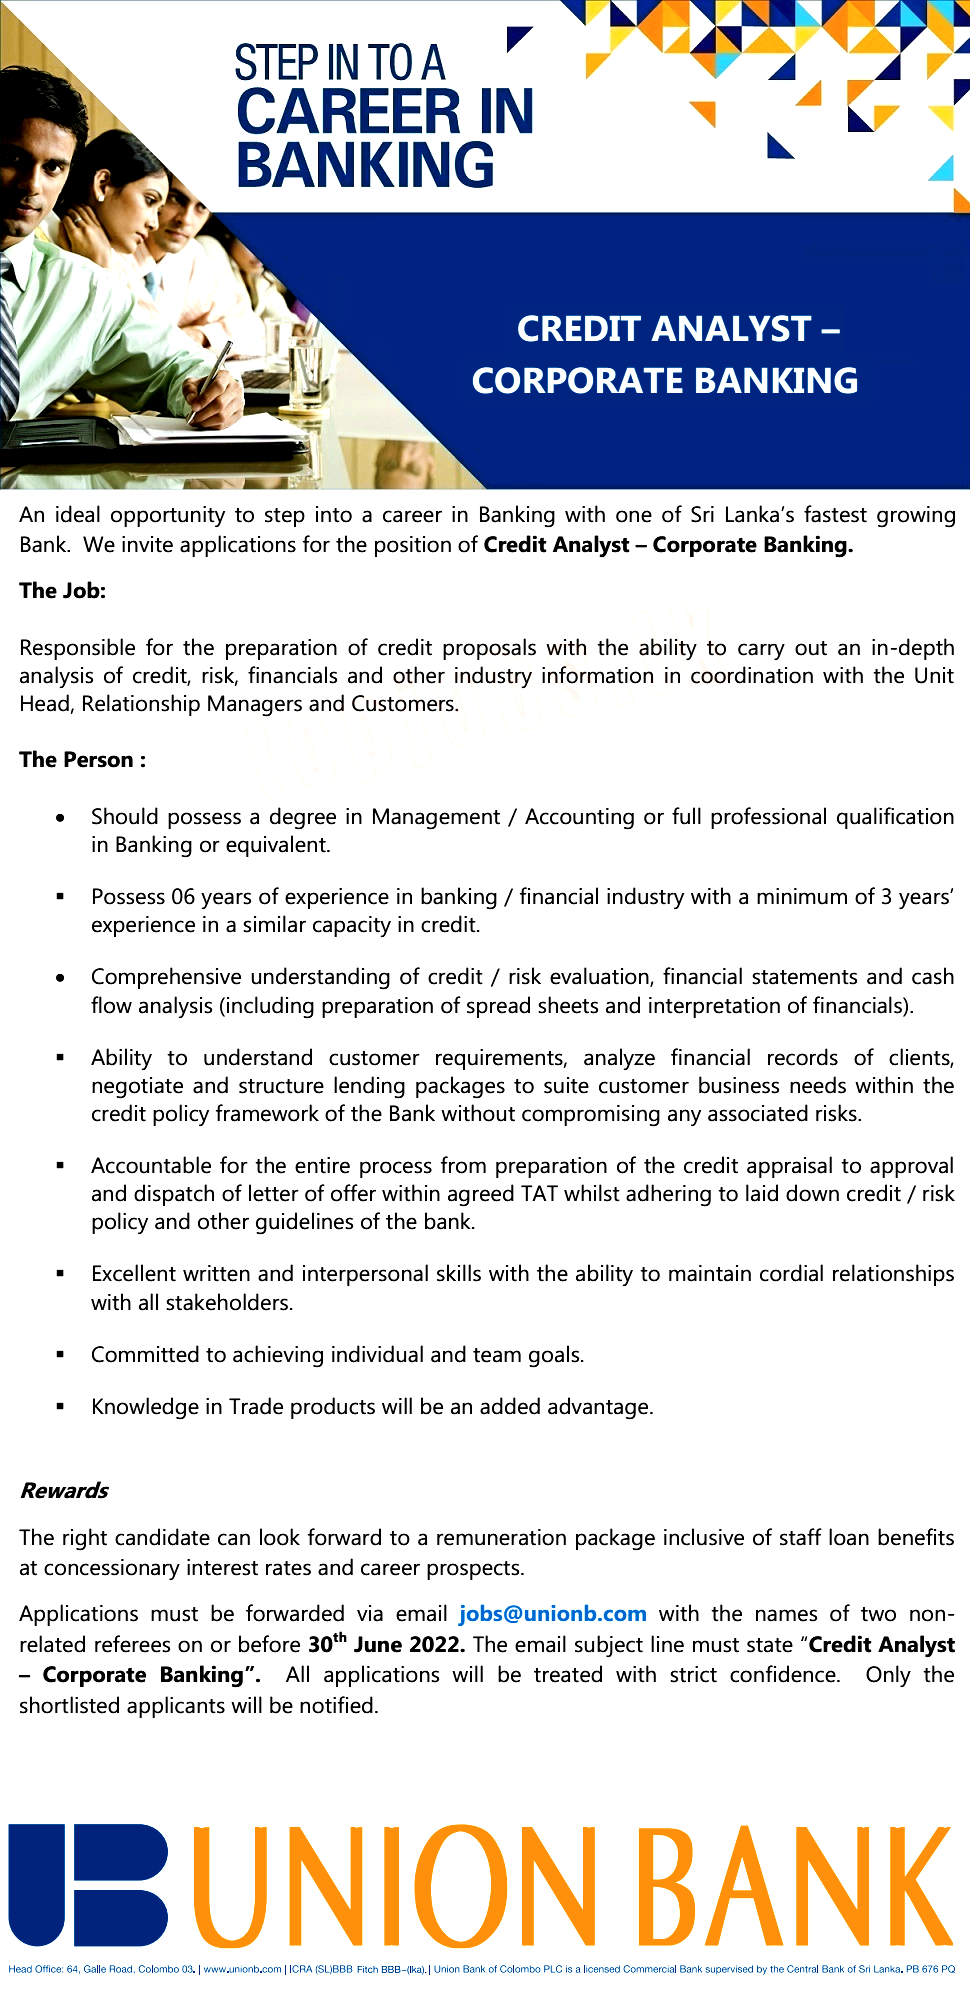 Credit Analyst (Corporate Banking) Vacancy - Union Bank Jobs Vacancies